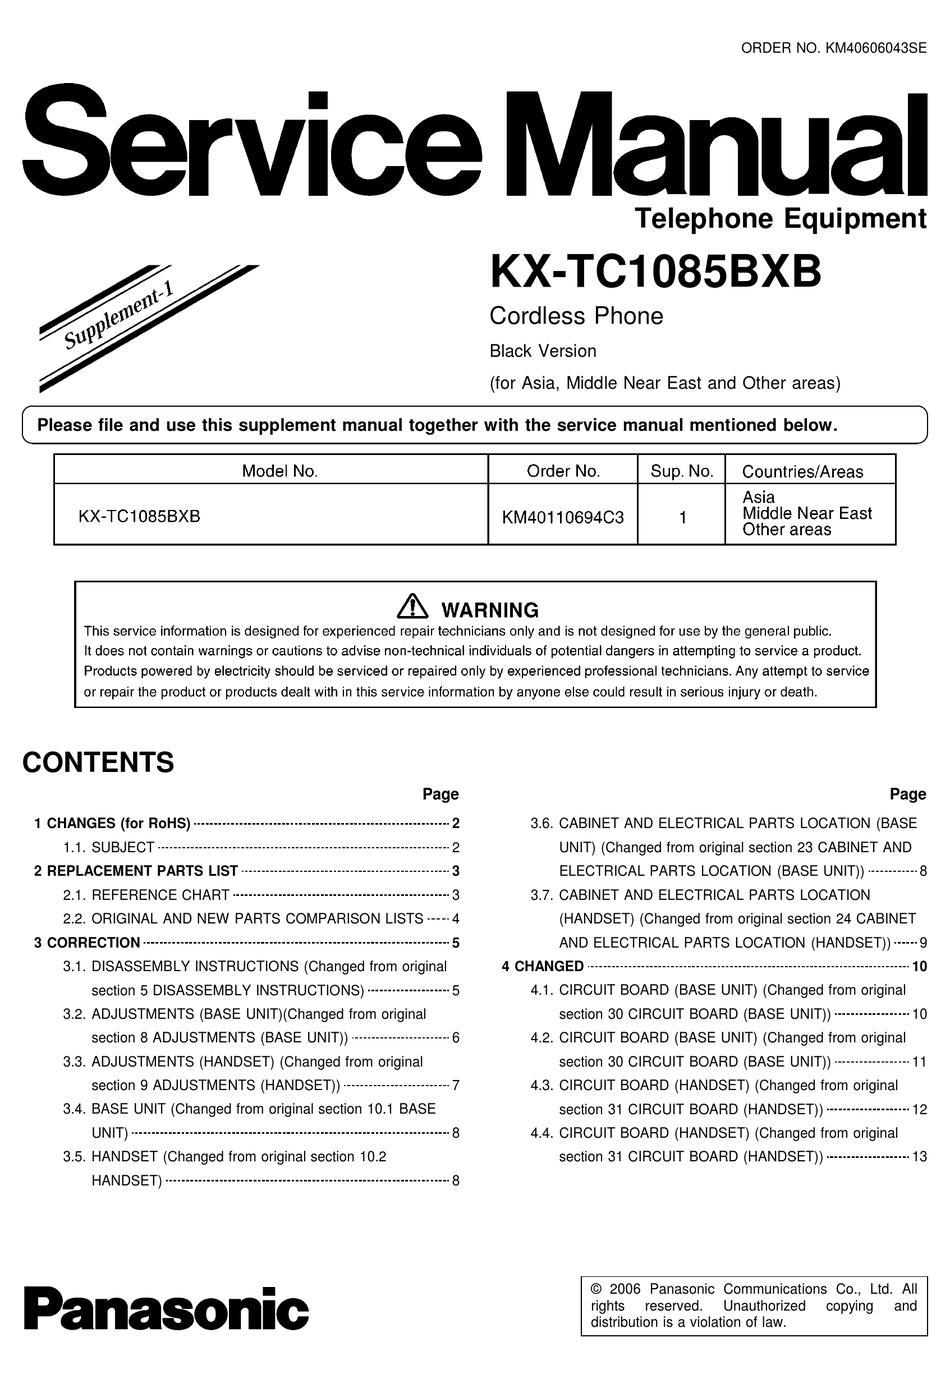 PANASONIC KX-TC1085BXB SERVICE MANUAL Pdf Download | ManualsLib